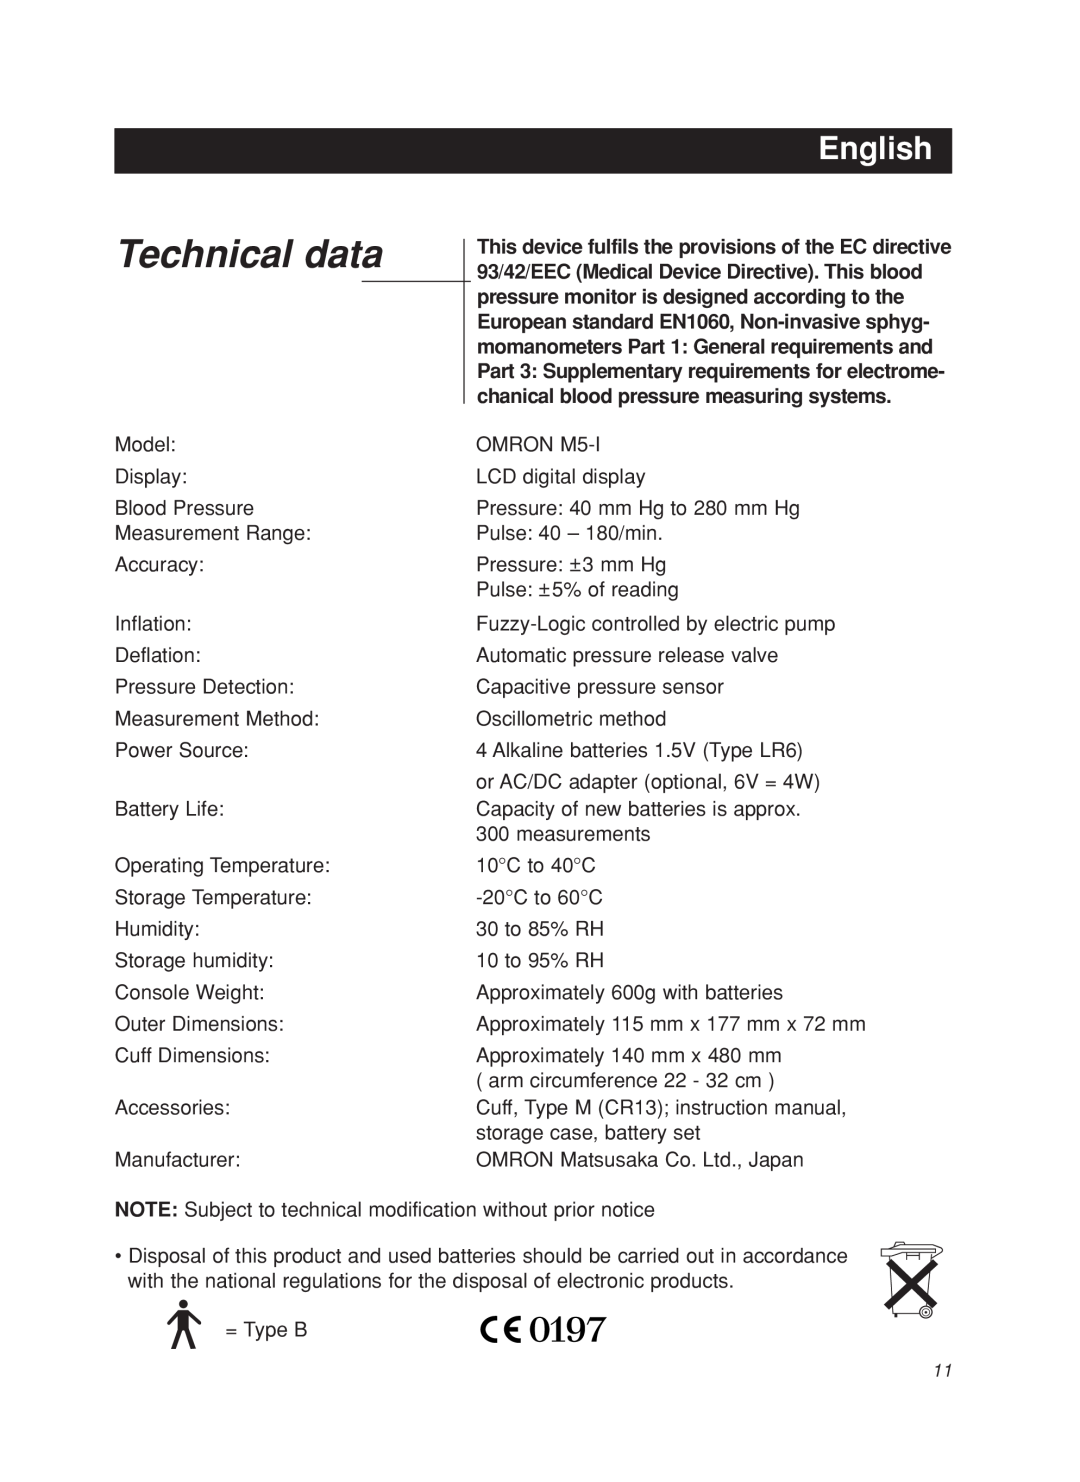 Omron M5-I instruction manual Technical data, English 